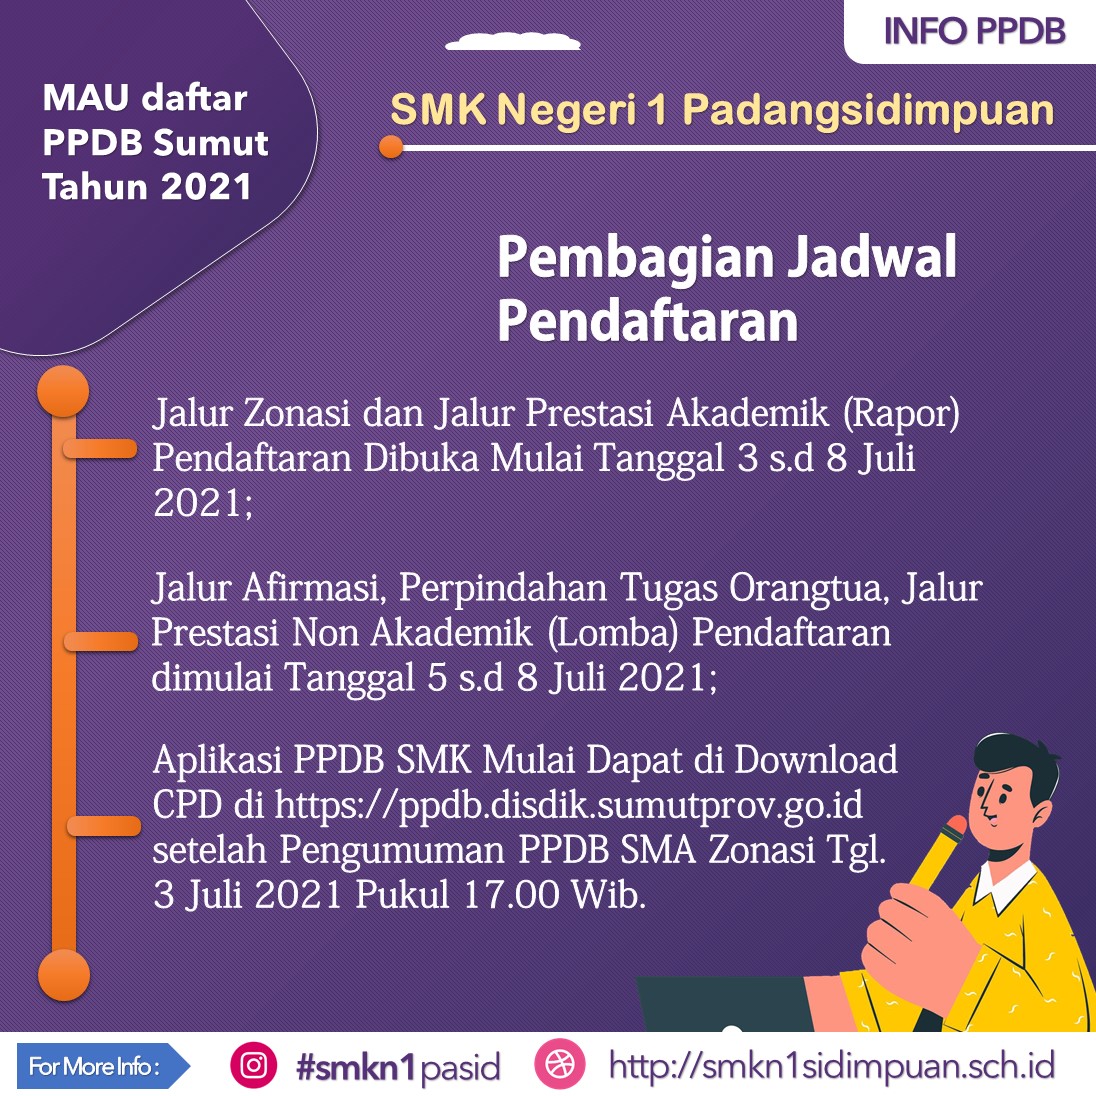 Pengumuman 2021 link ppdb sumut PPDB Sumut